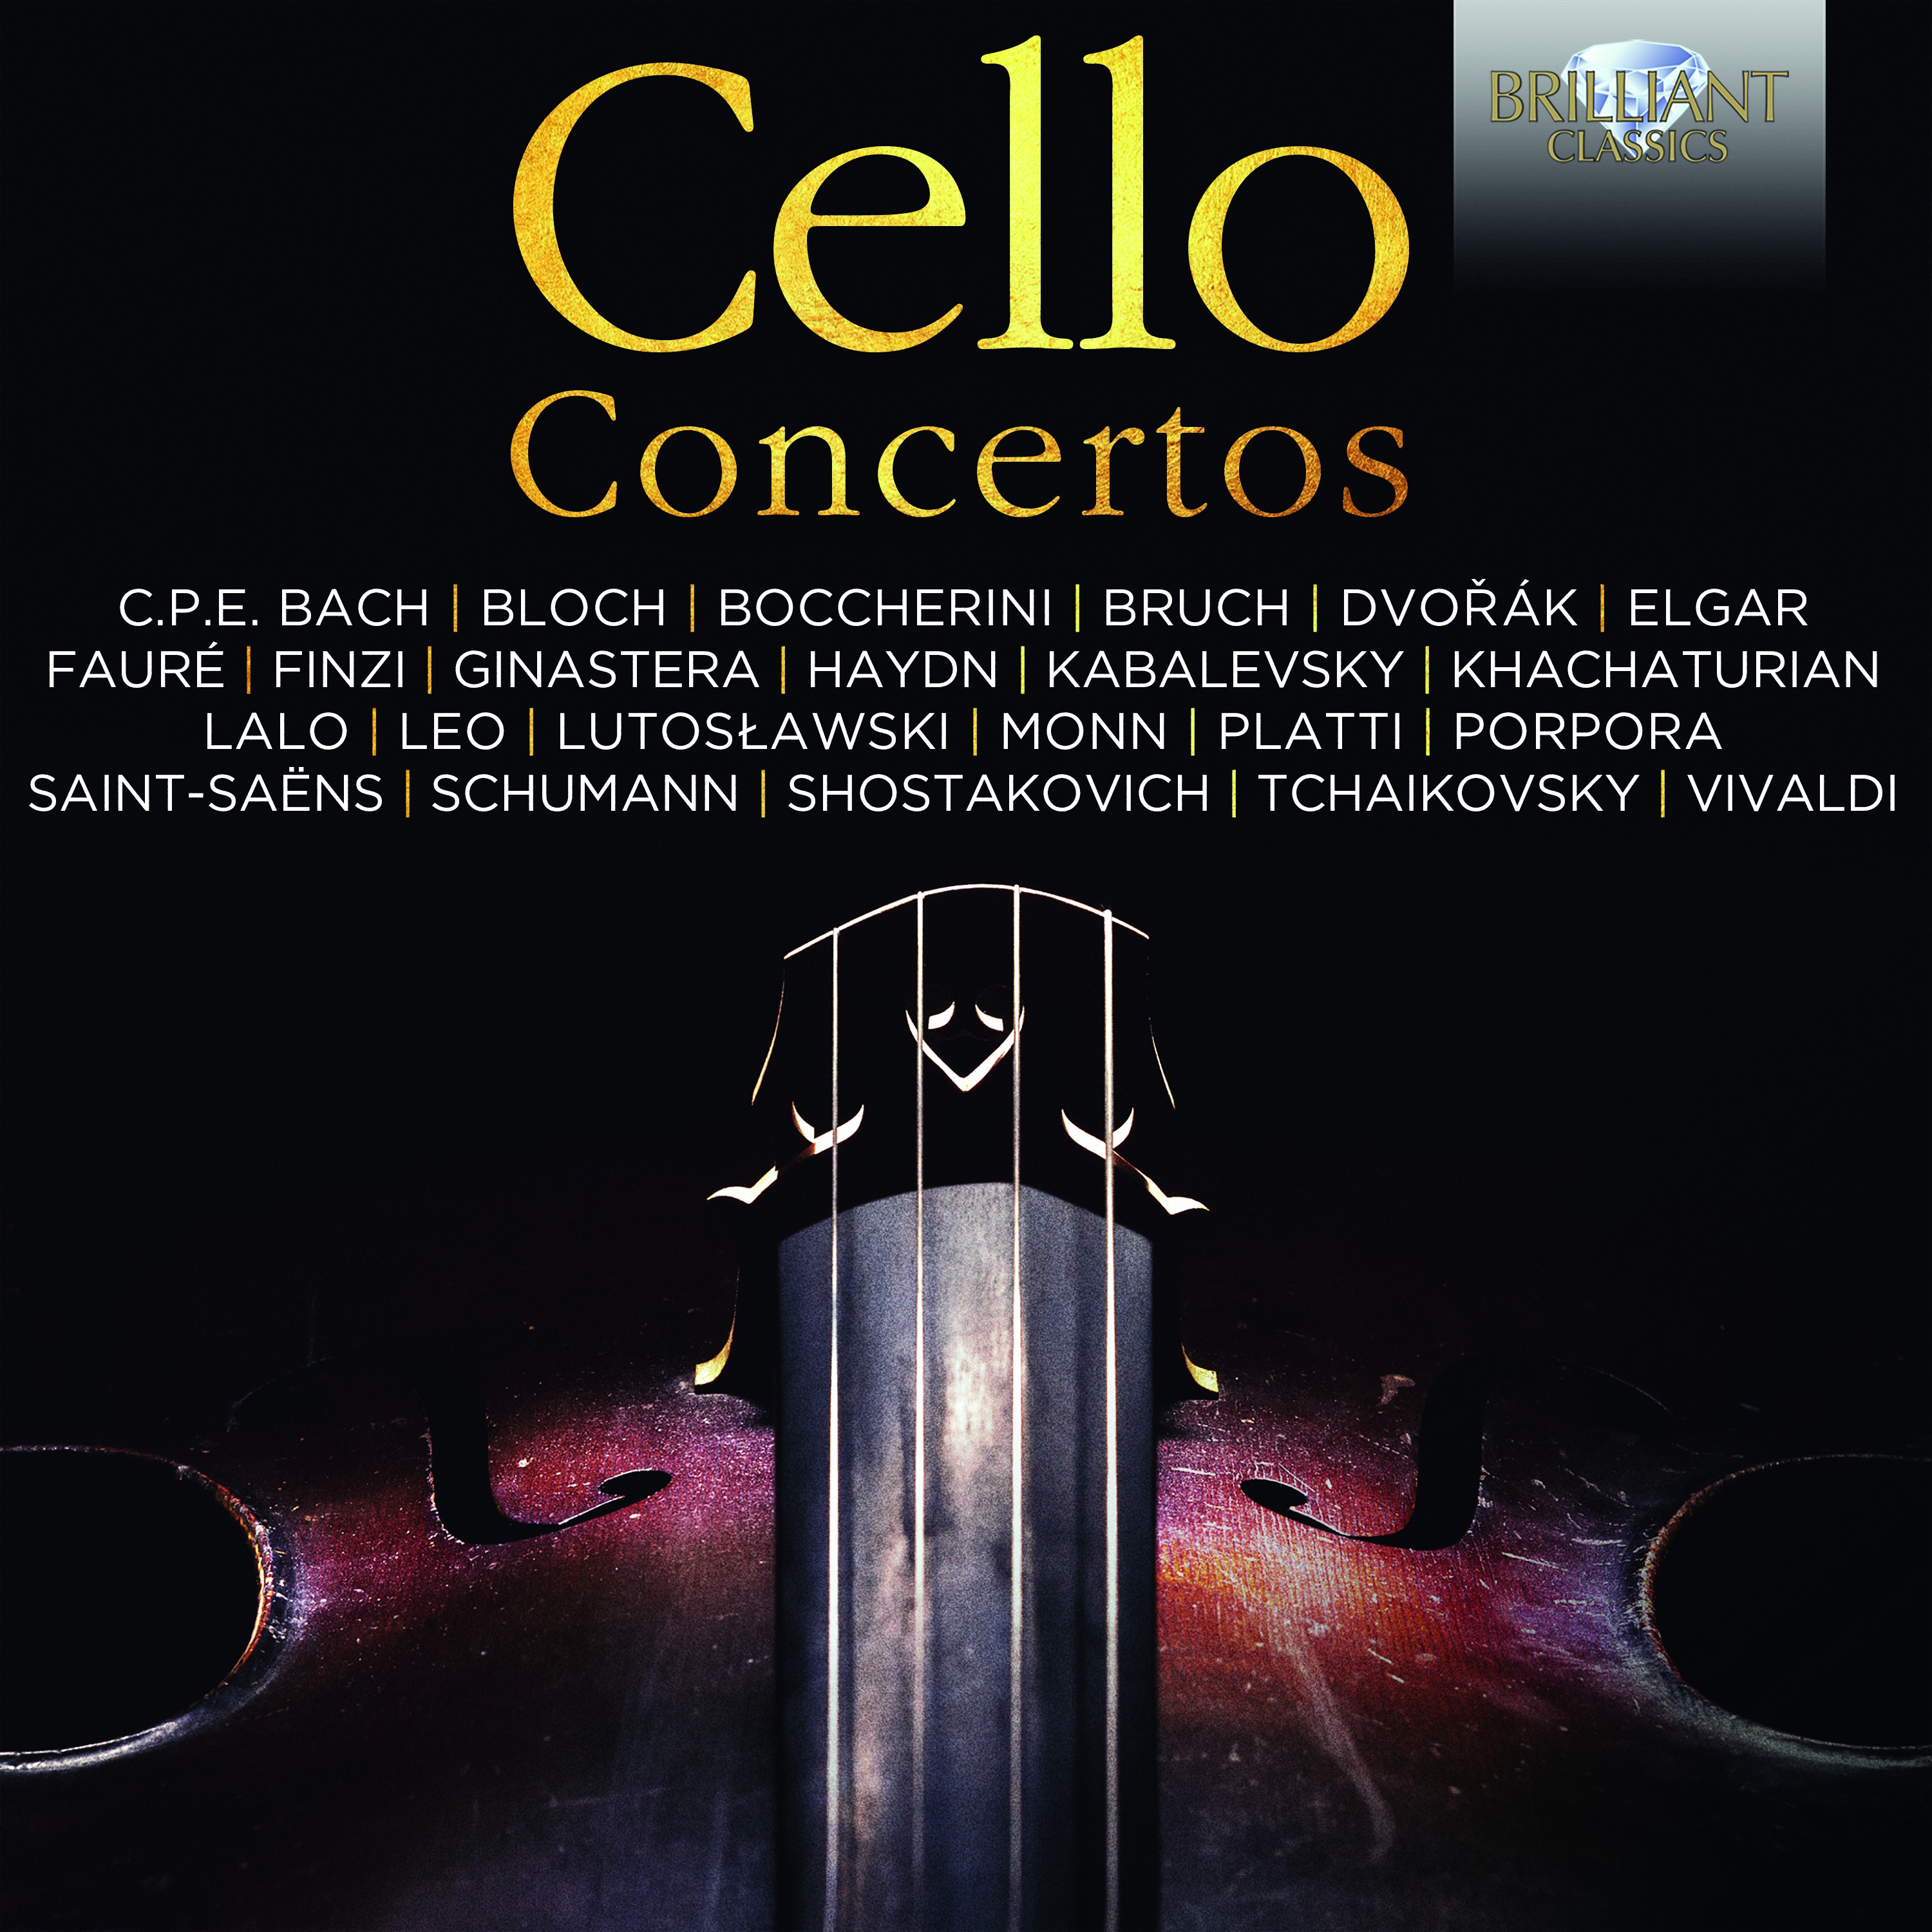 Concerto for Cello and Strings No. 2 in D Major, G. 479: II. Adagio